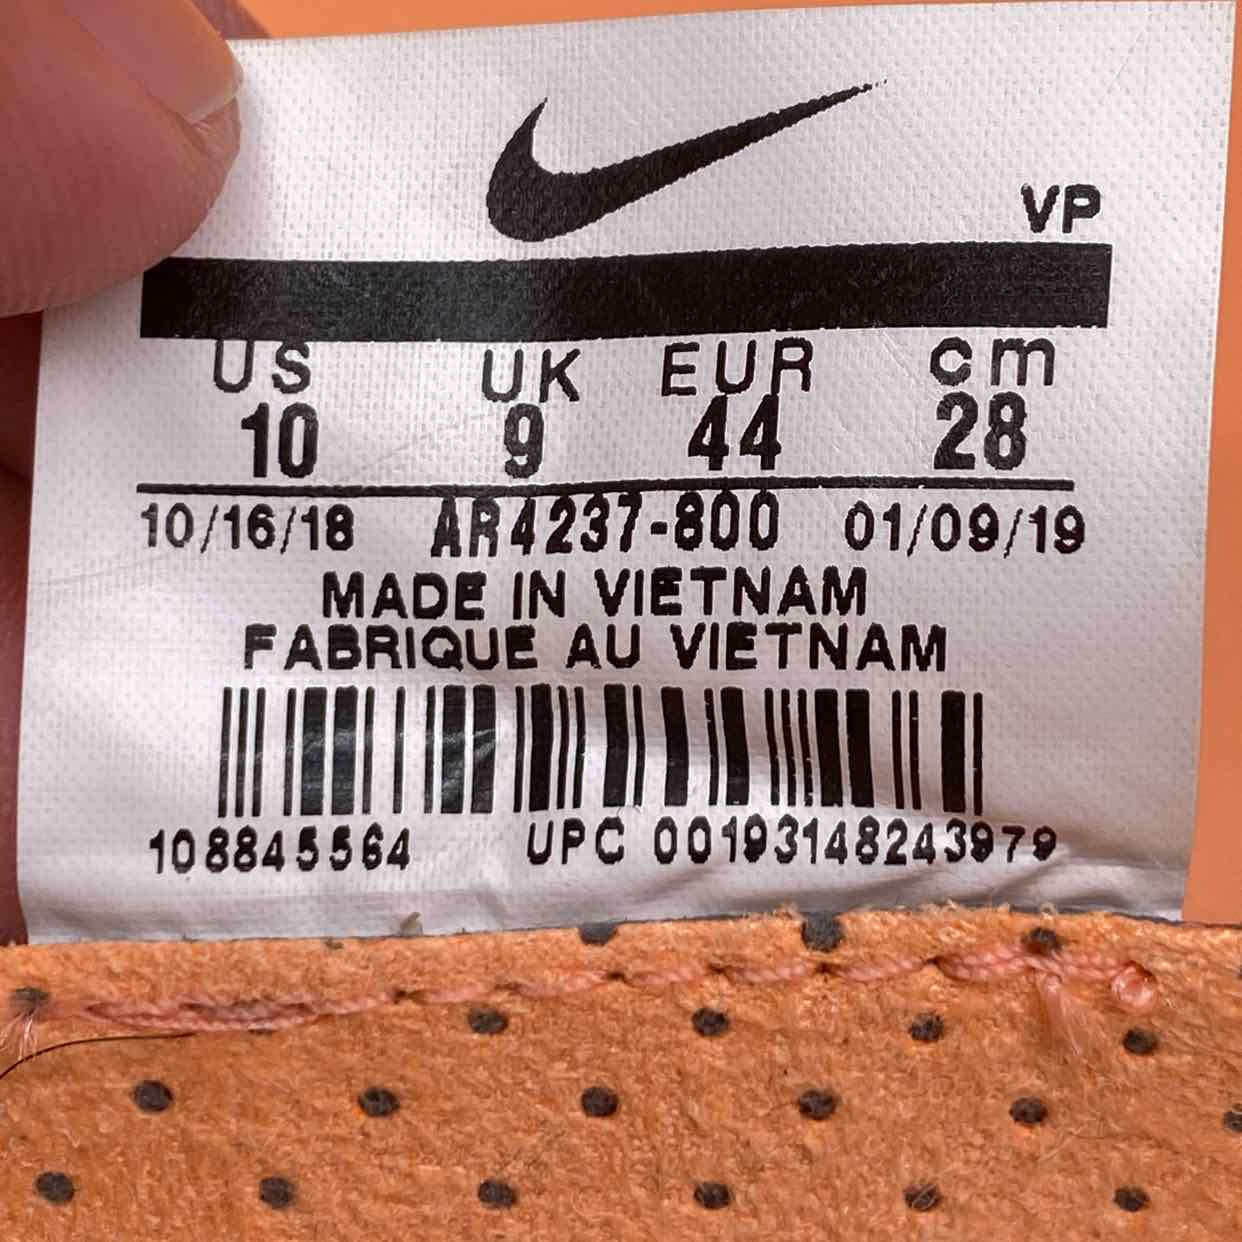 Nike Air Fear of God 1 "Orange Pulse" 2019 Used Size 10